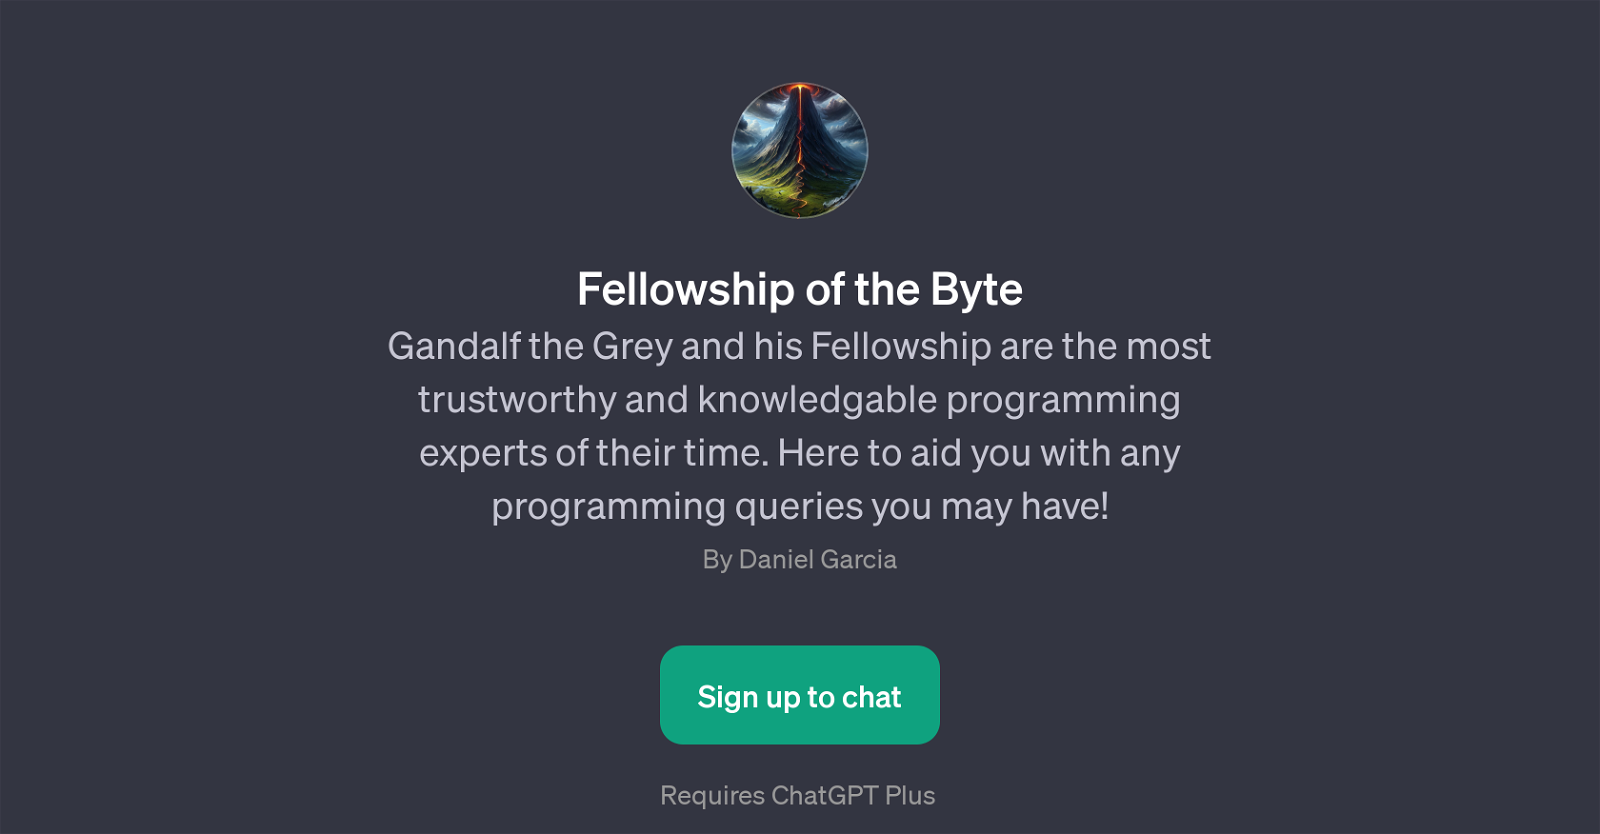 Fellowship of the Byte website